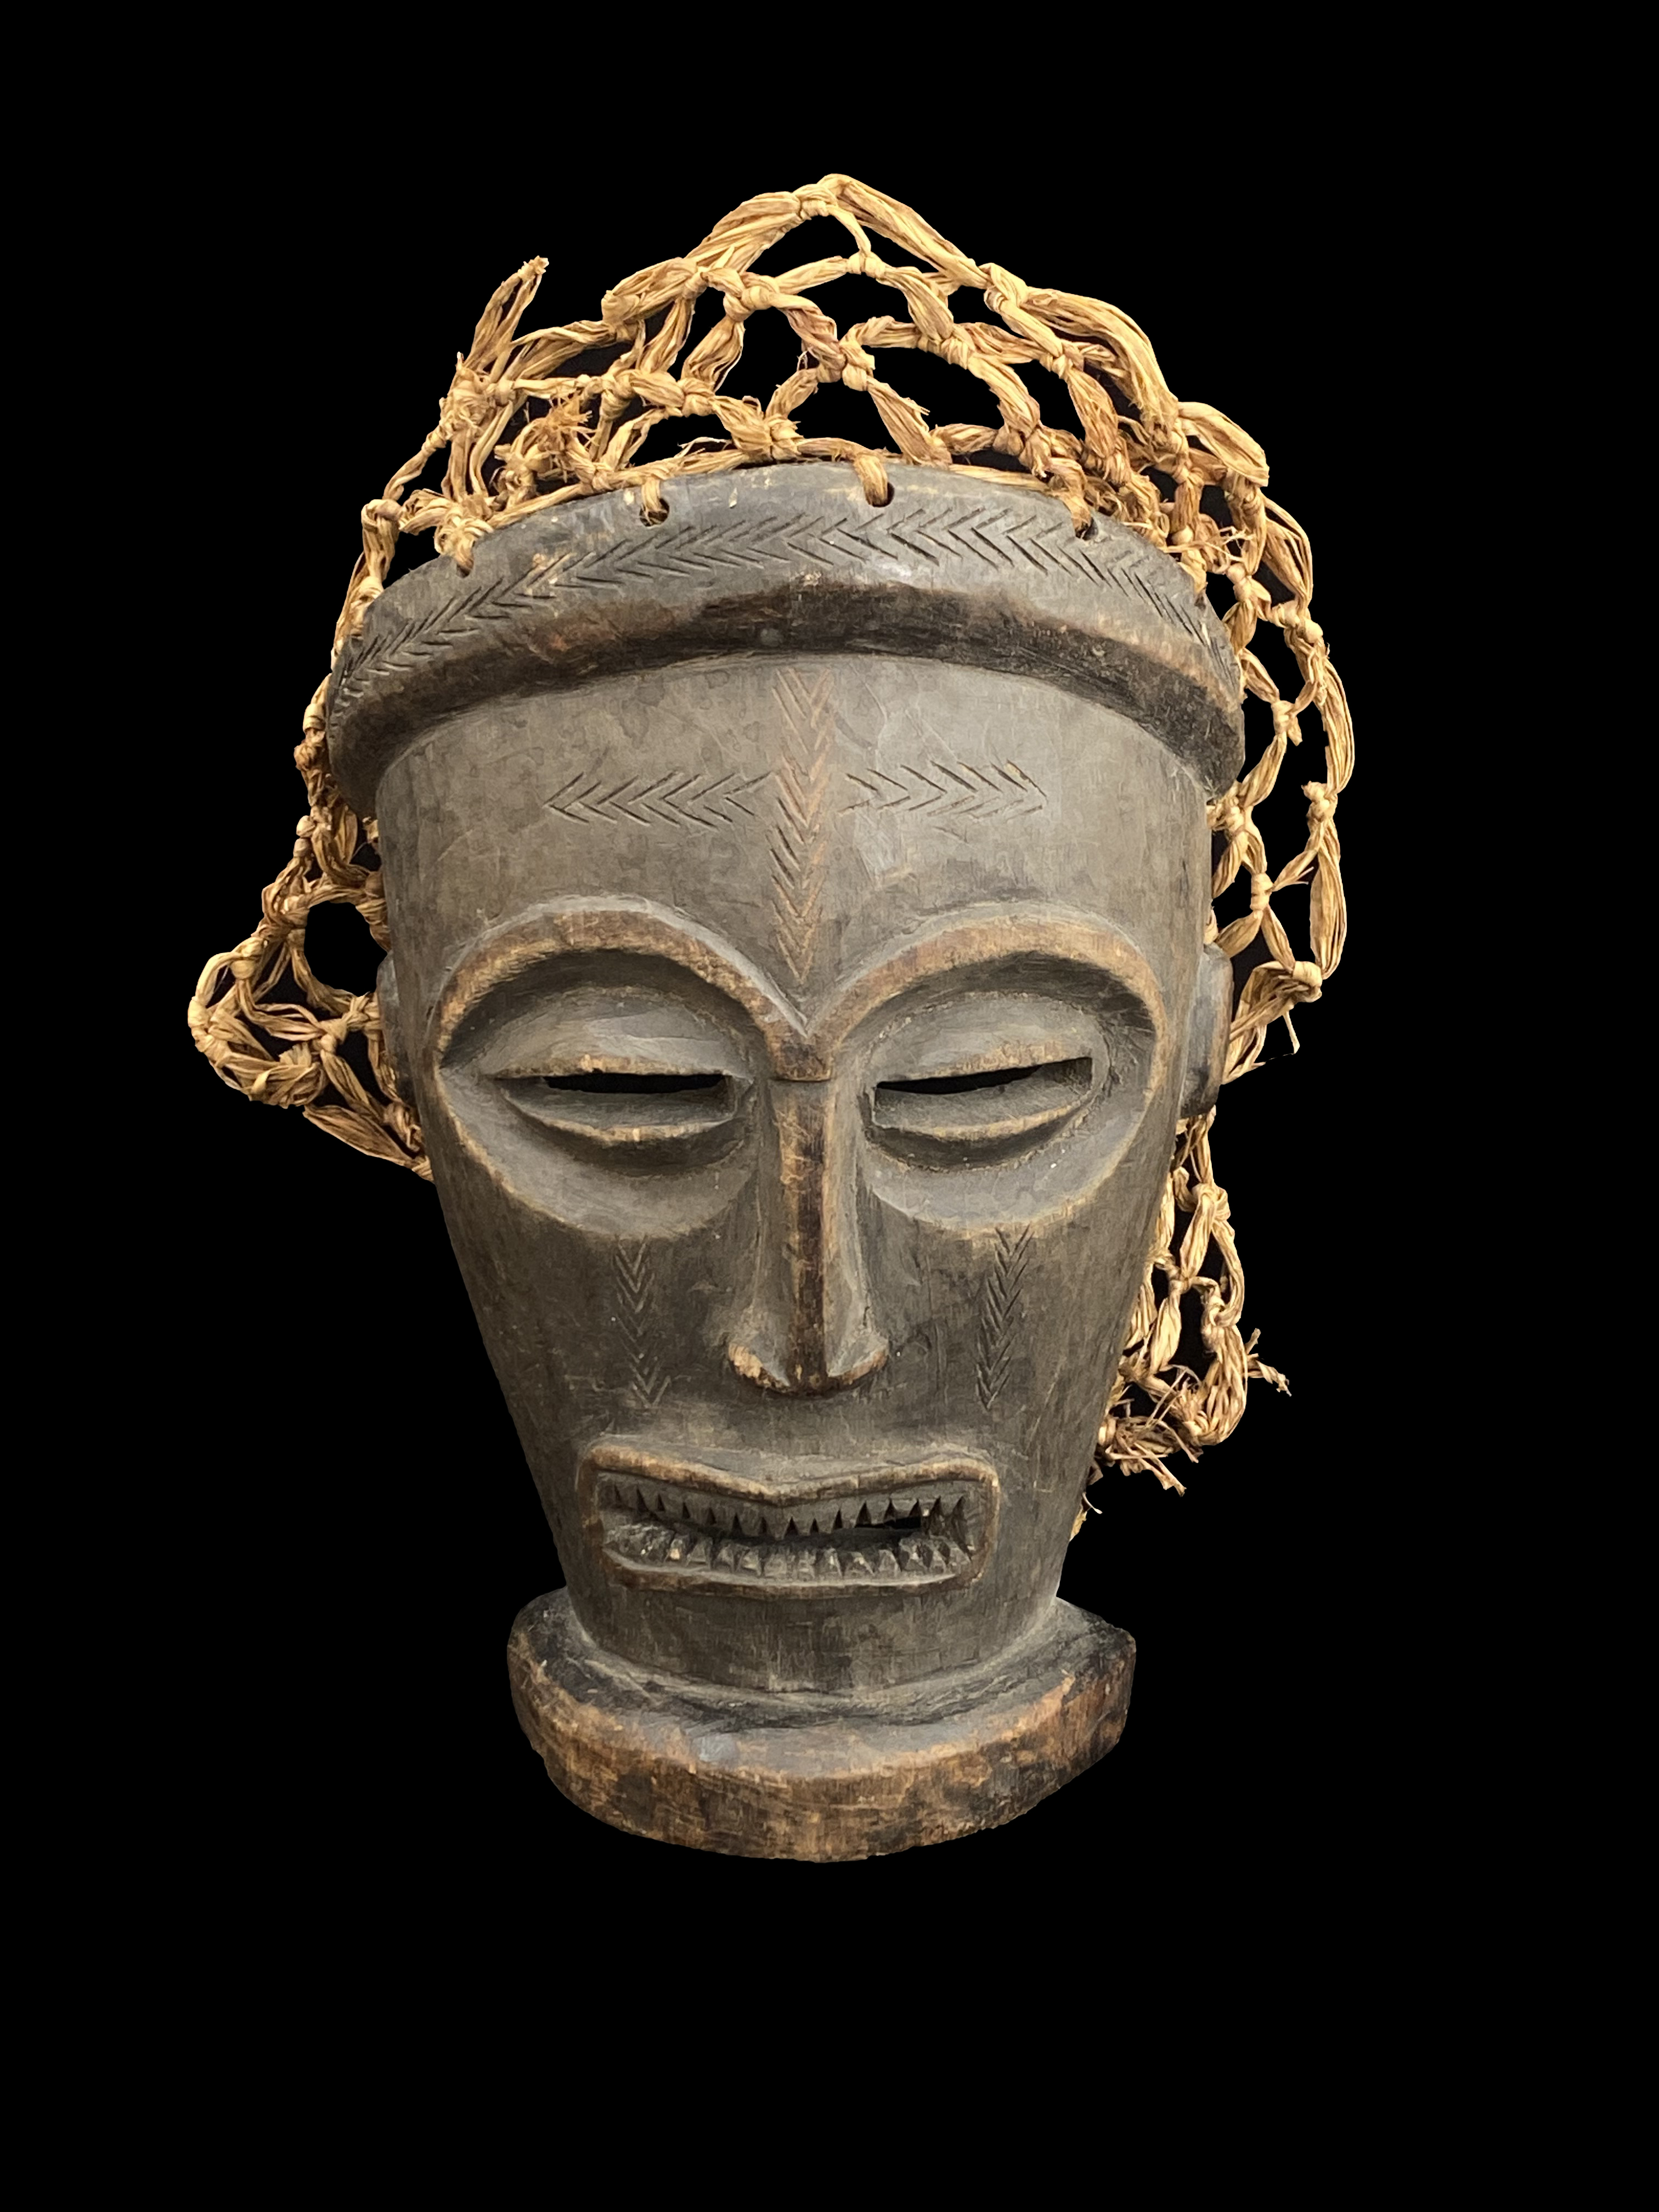 Male Face Mask (Chihongo) - Chokwe People, D.R. Congo